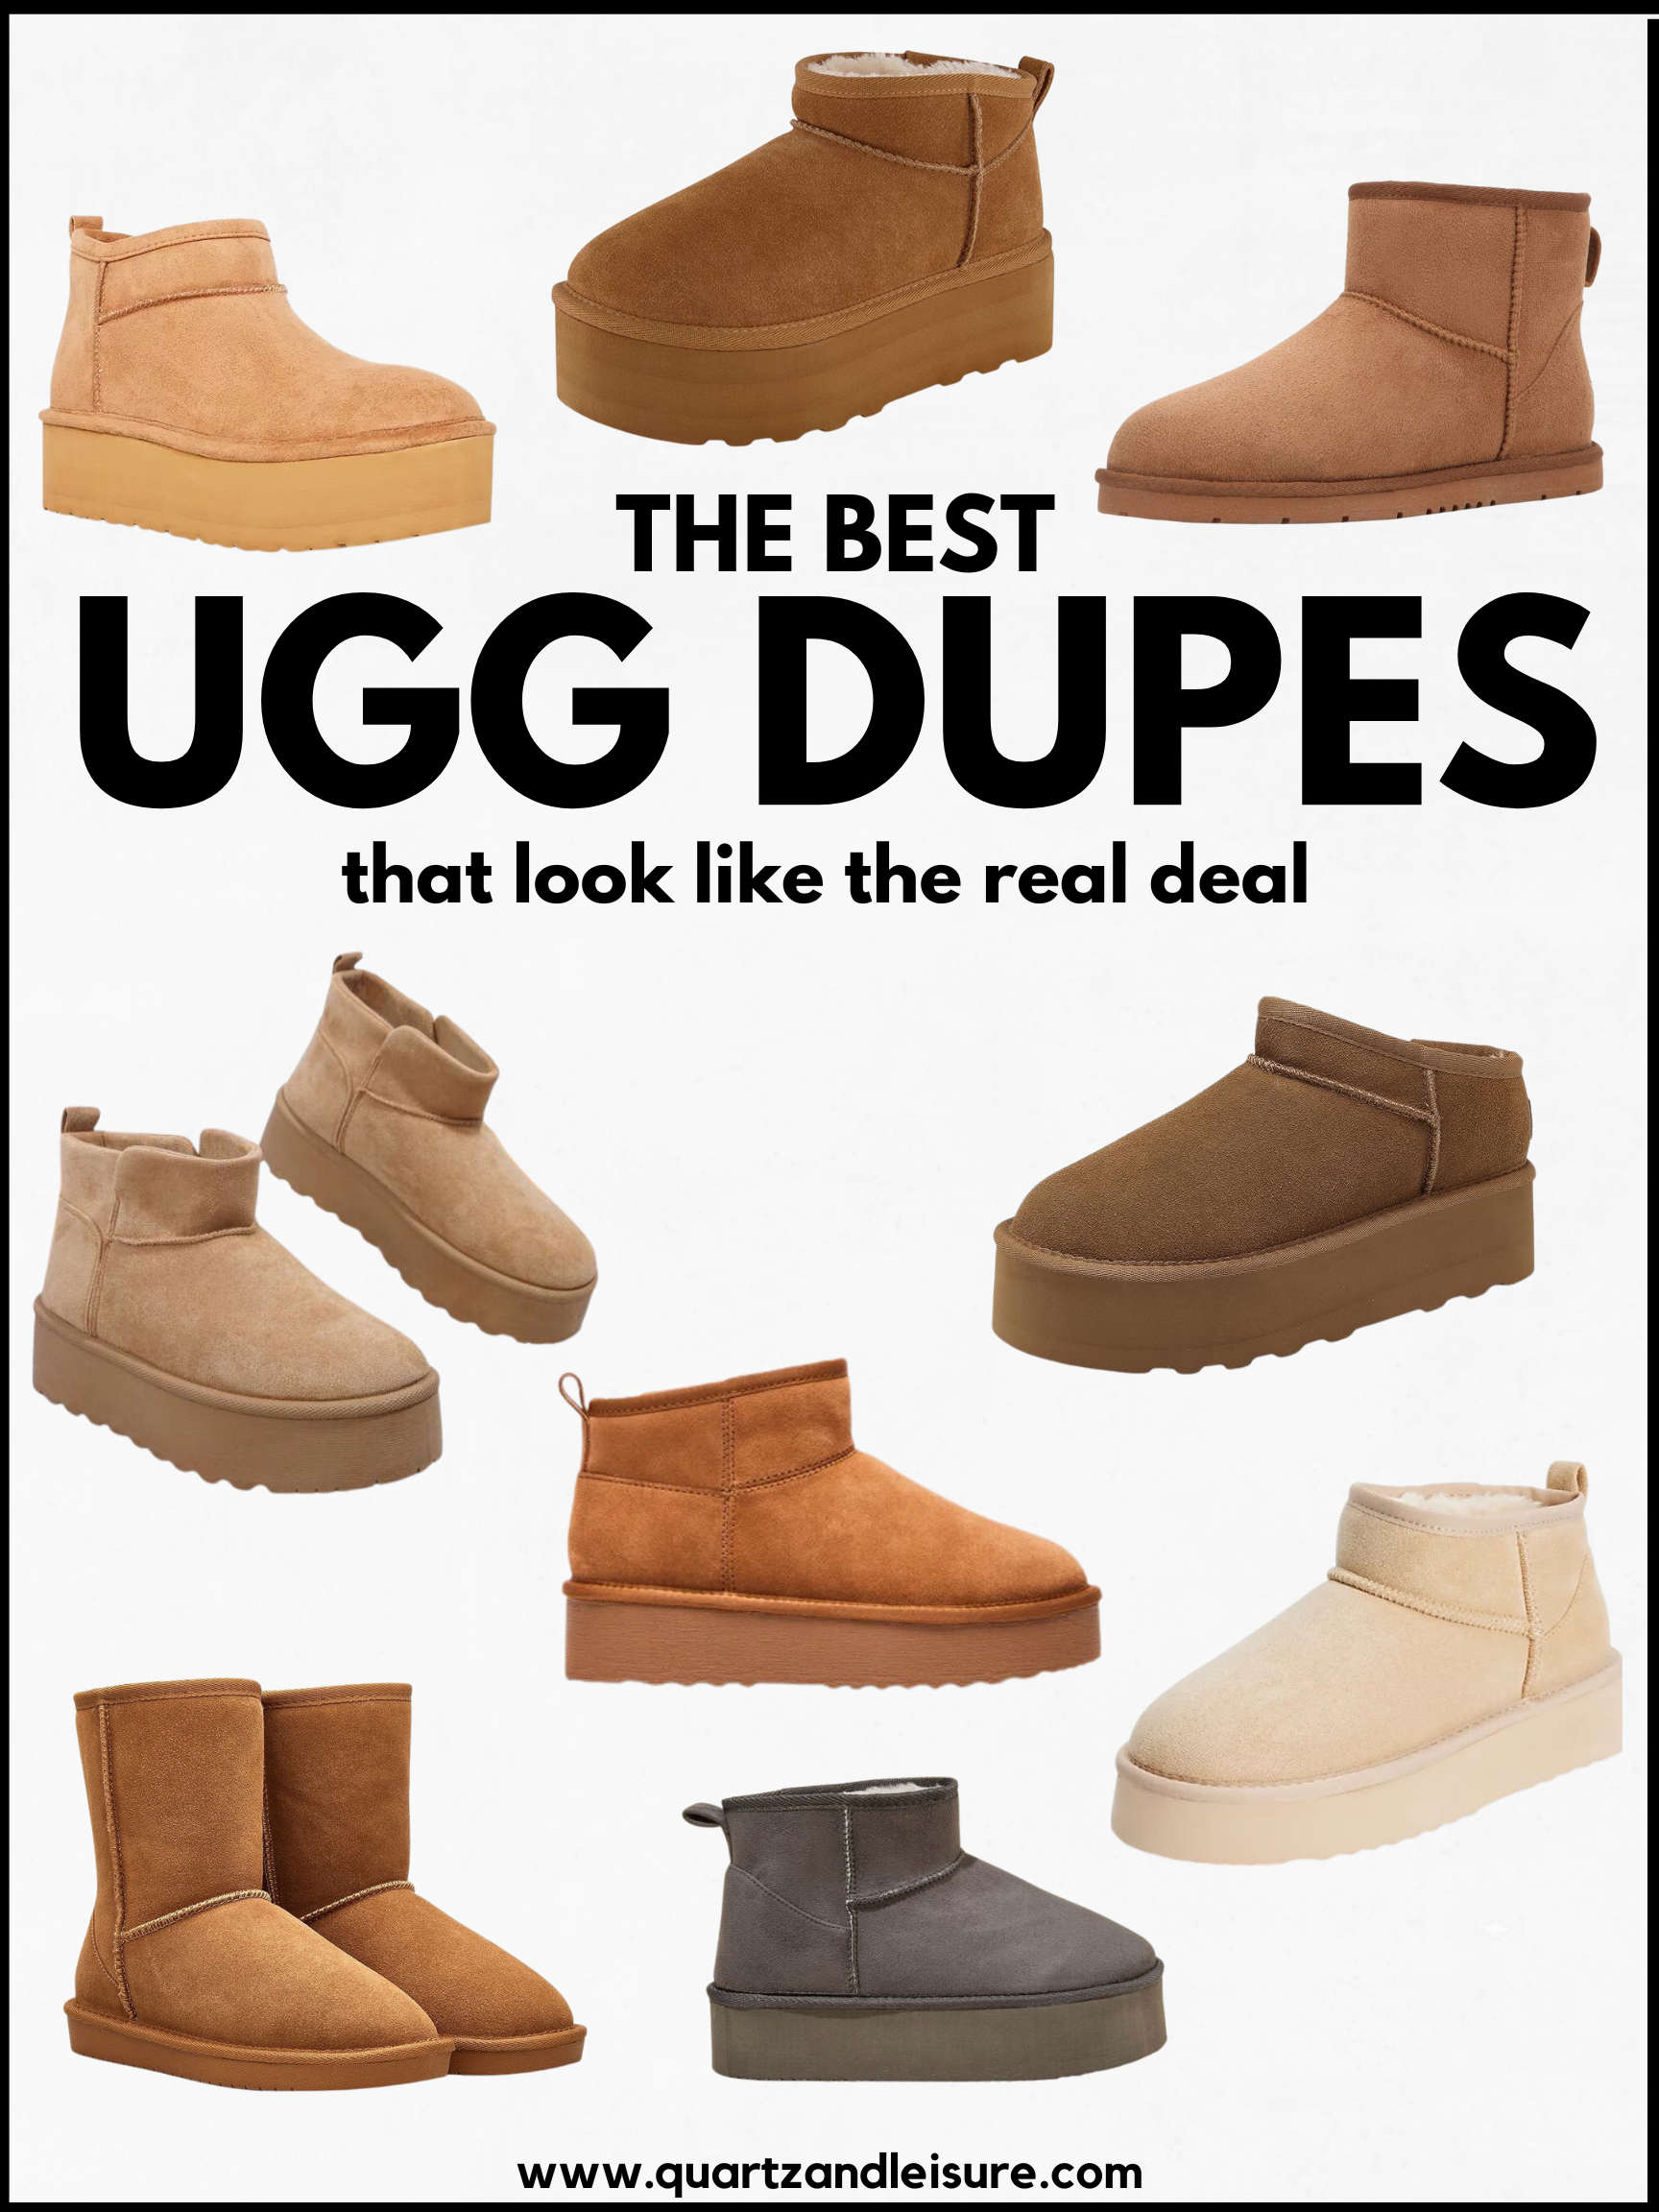 Ugg ultra mini and platform boot: Best high-street dupes